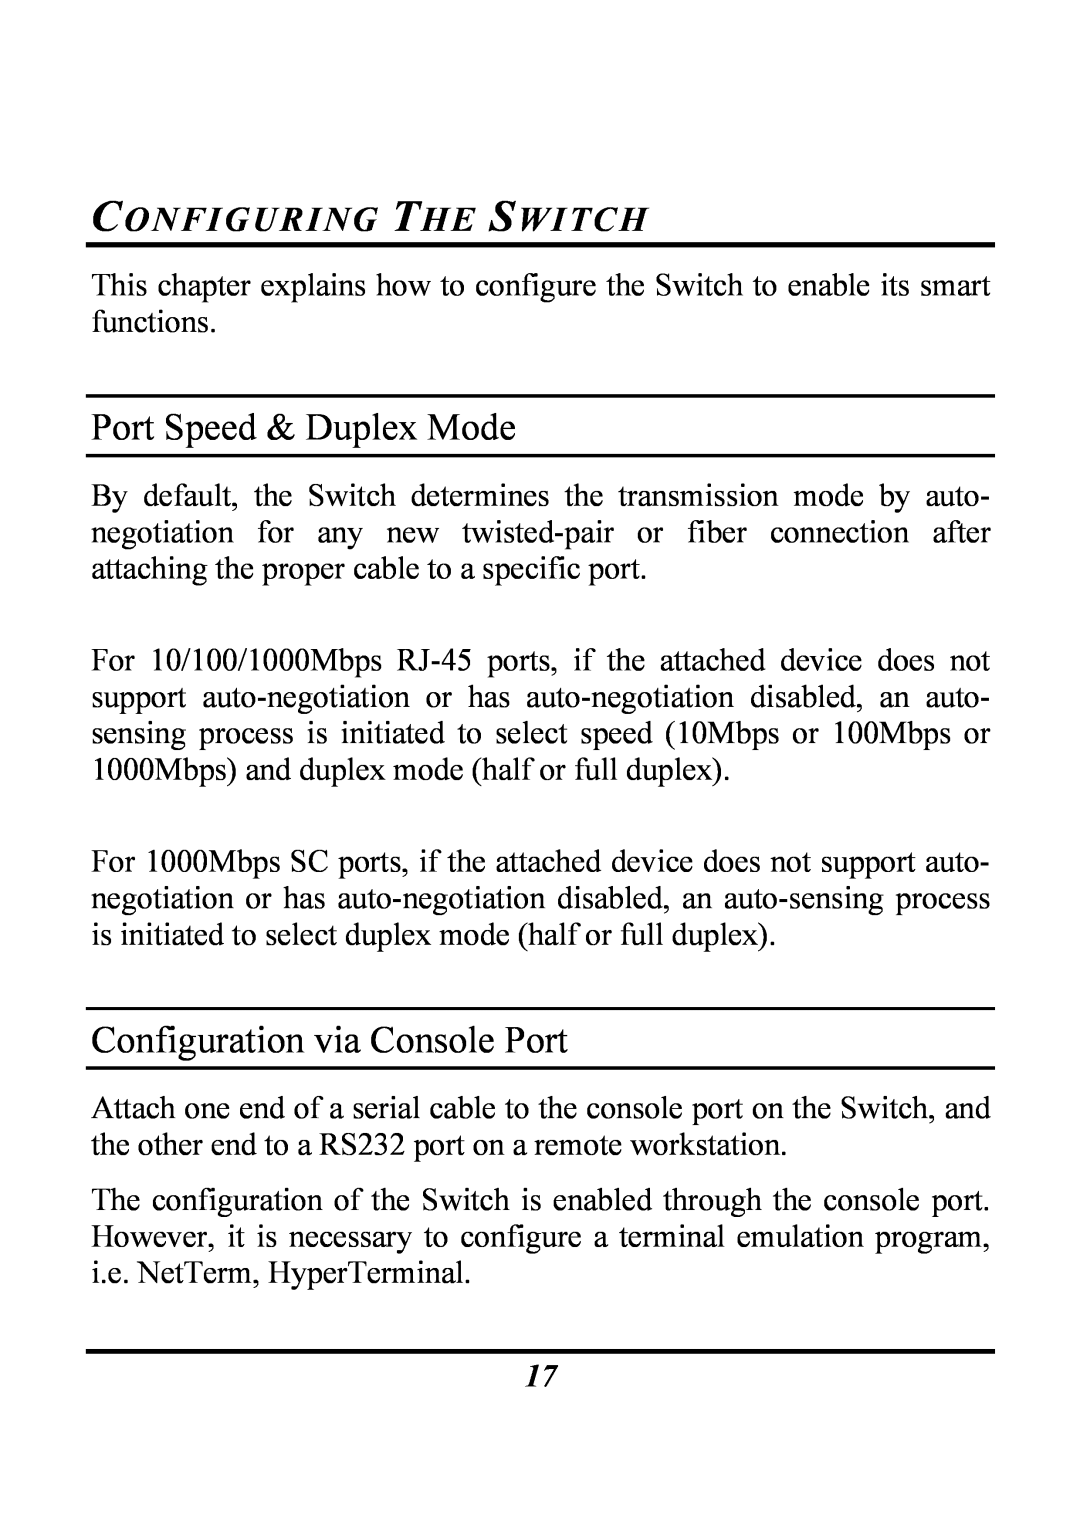 Atlantis Land Rack Gigabit Switch Layer 2 Port Speed & Duplex Mode, Configuration via Console Port, Configuring The Switch 